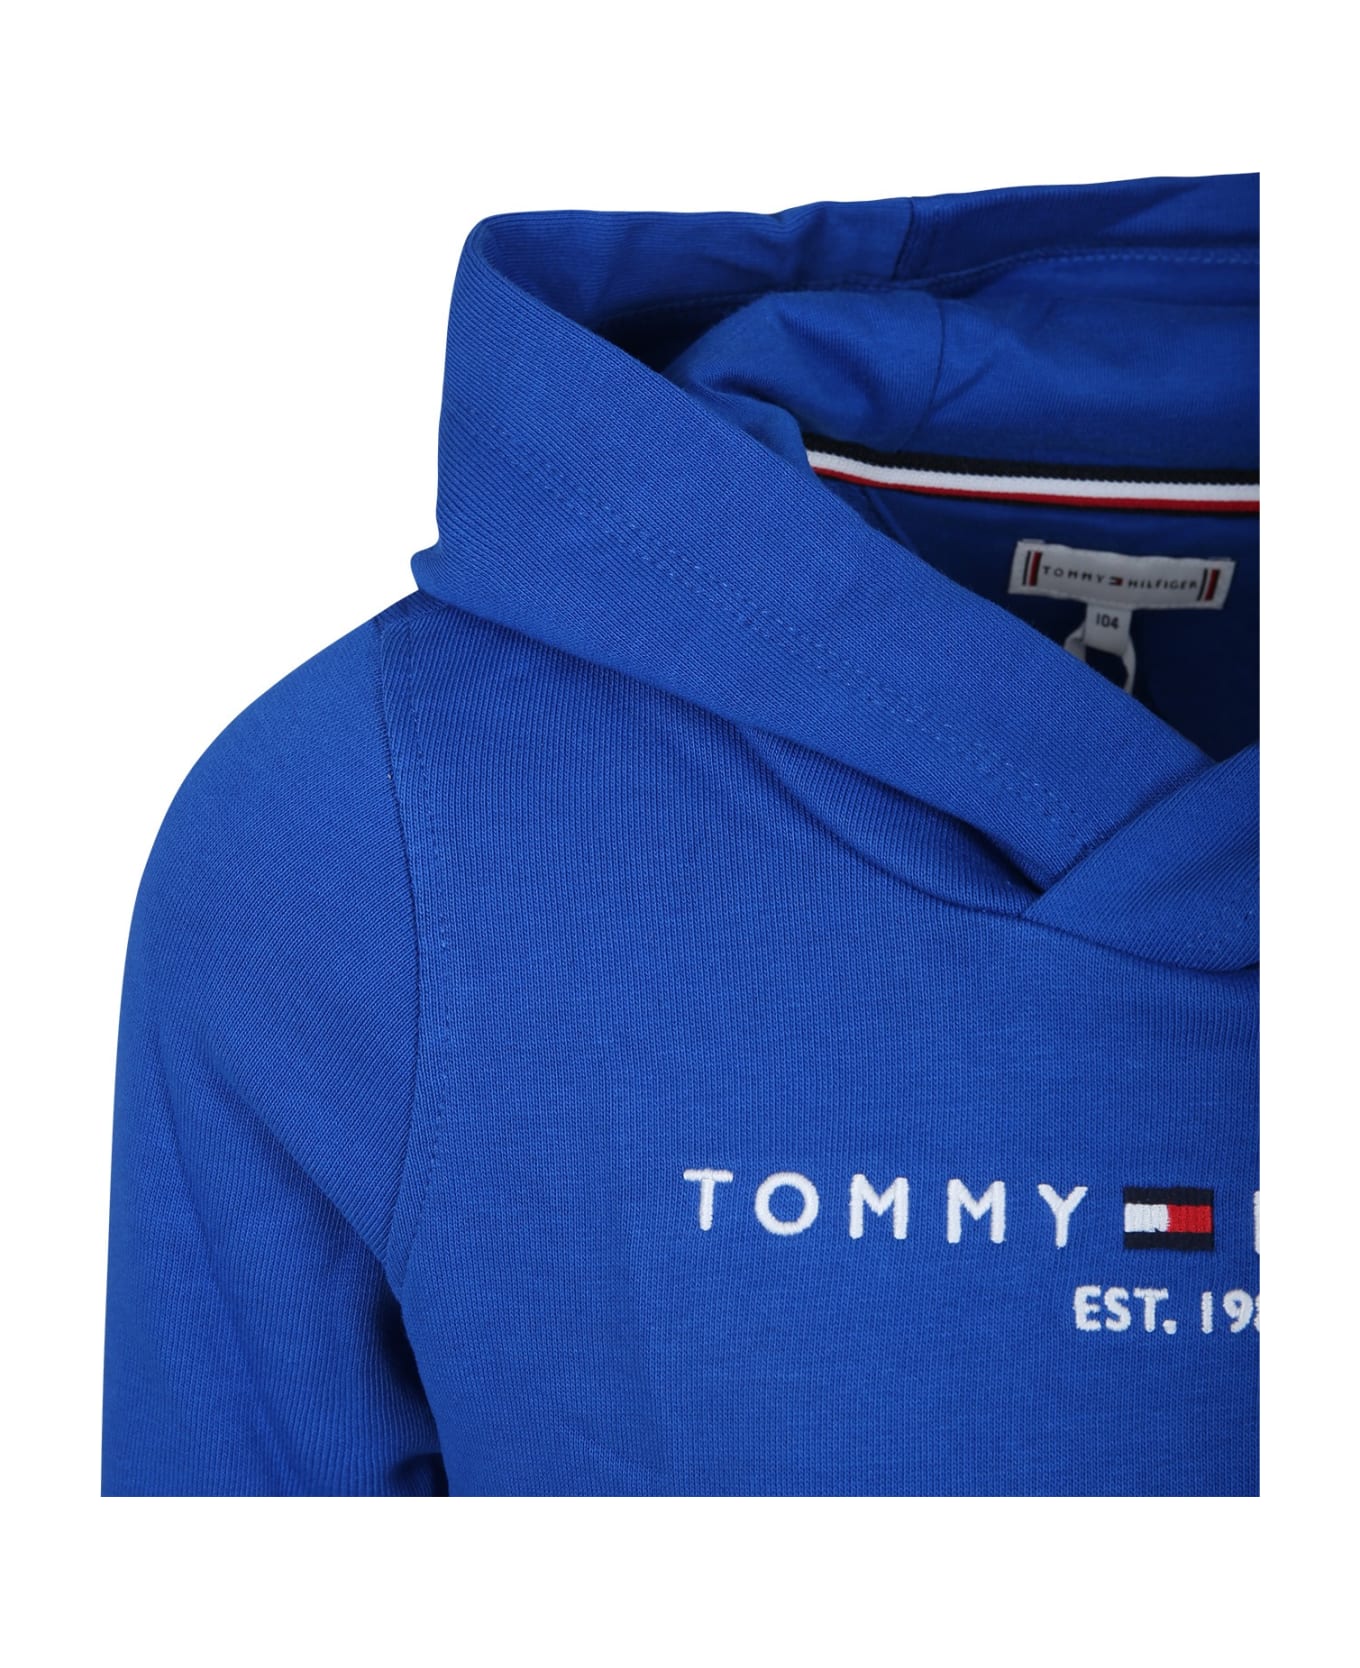 Tommy Hilfiger Light Blue Sweatshirt For Boy With Logo - Light Blue